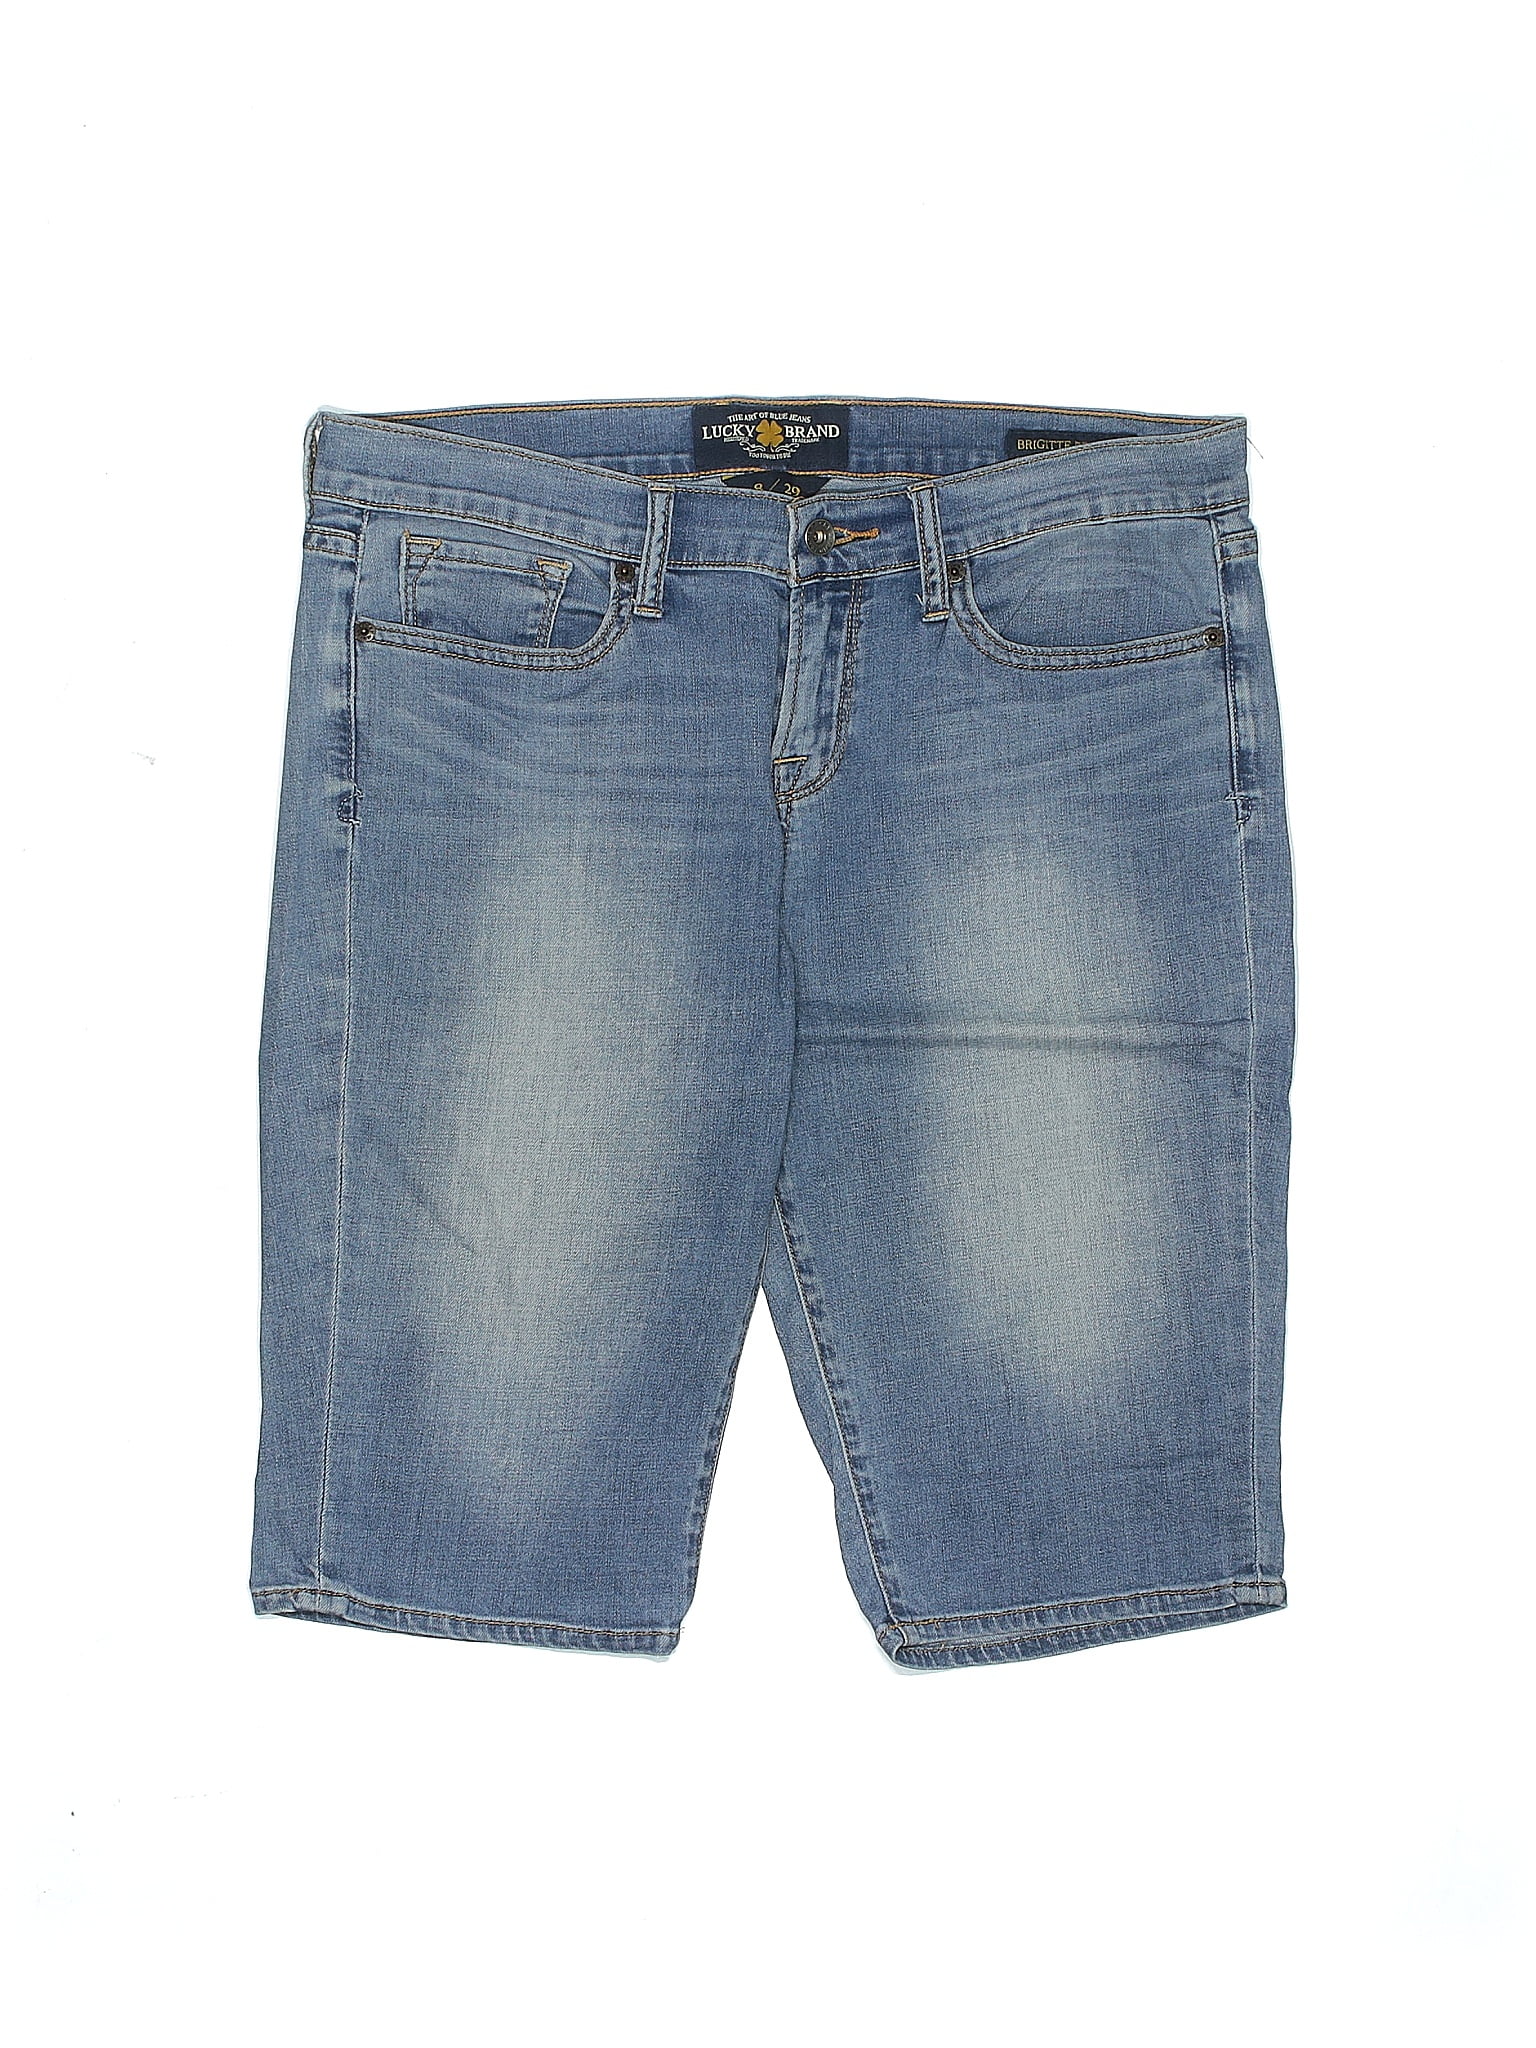 Lucky Brand Solid Blue Denim Shorts Size 8 - 74% off | thredUP